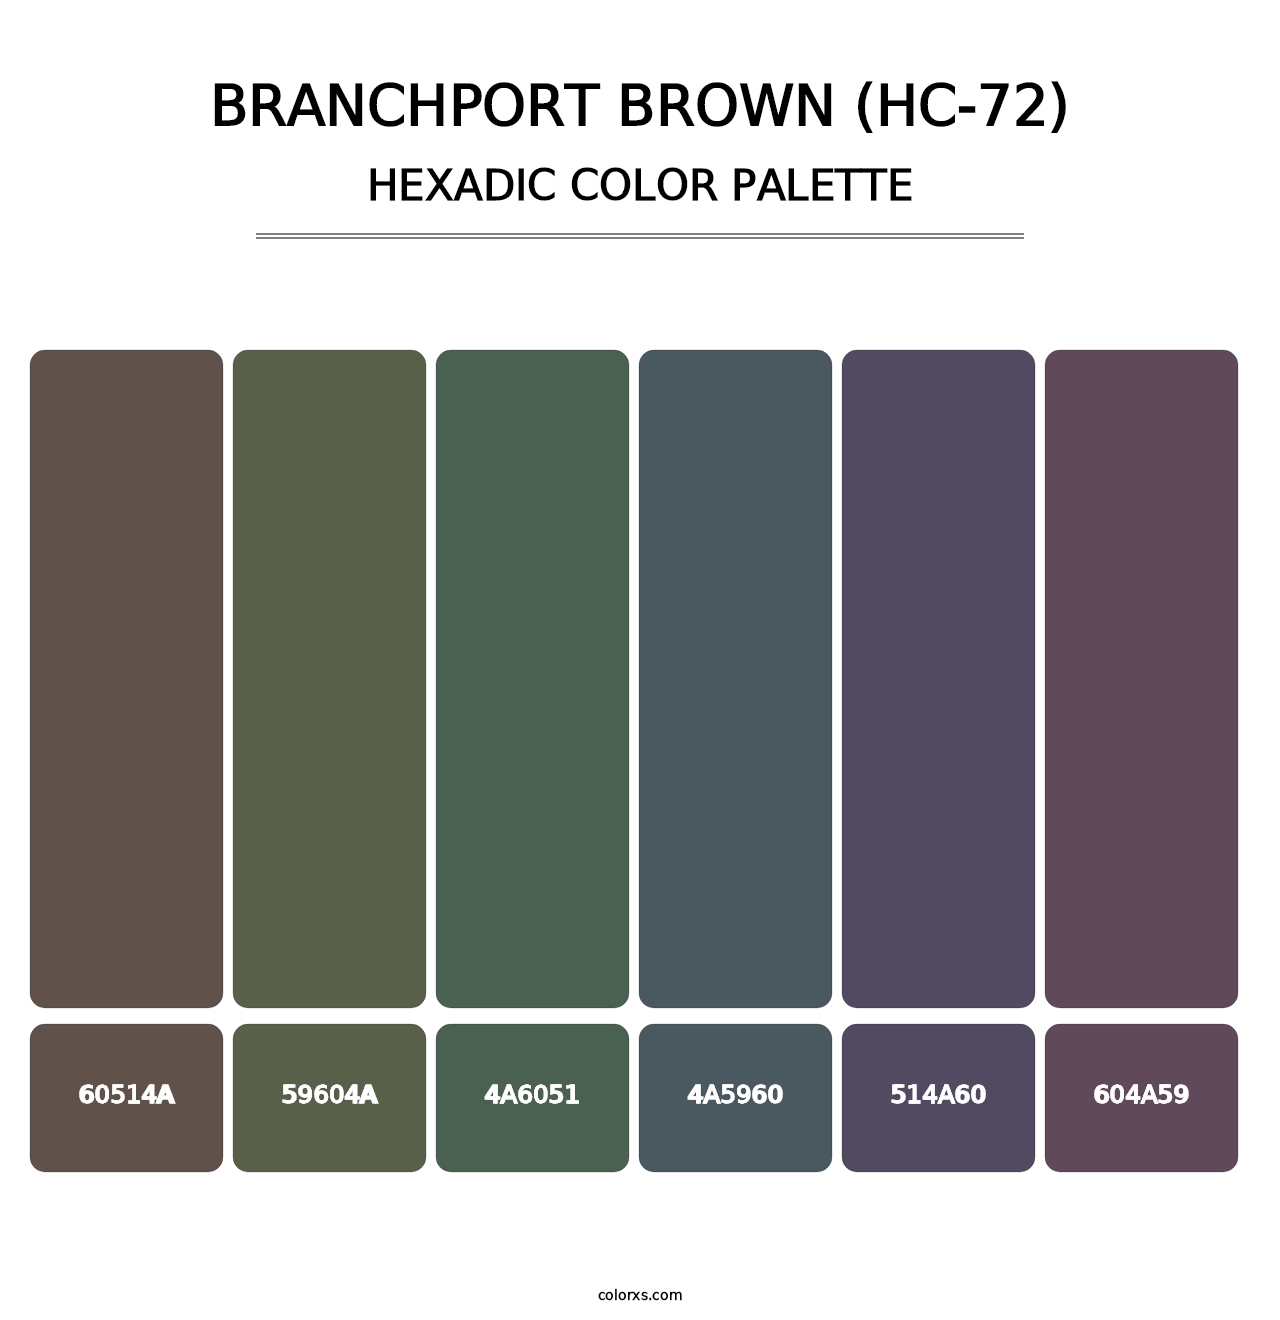 Branchport Brown (HC-72) - Hexadic Color Palette